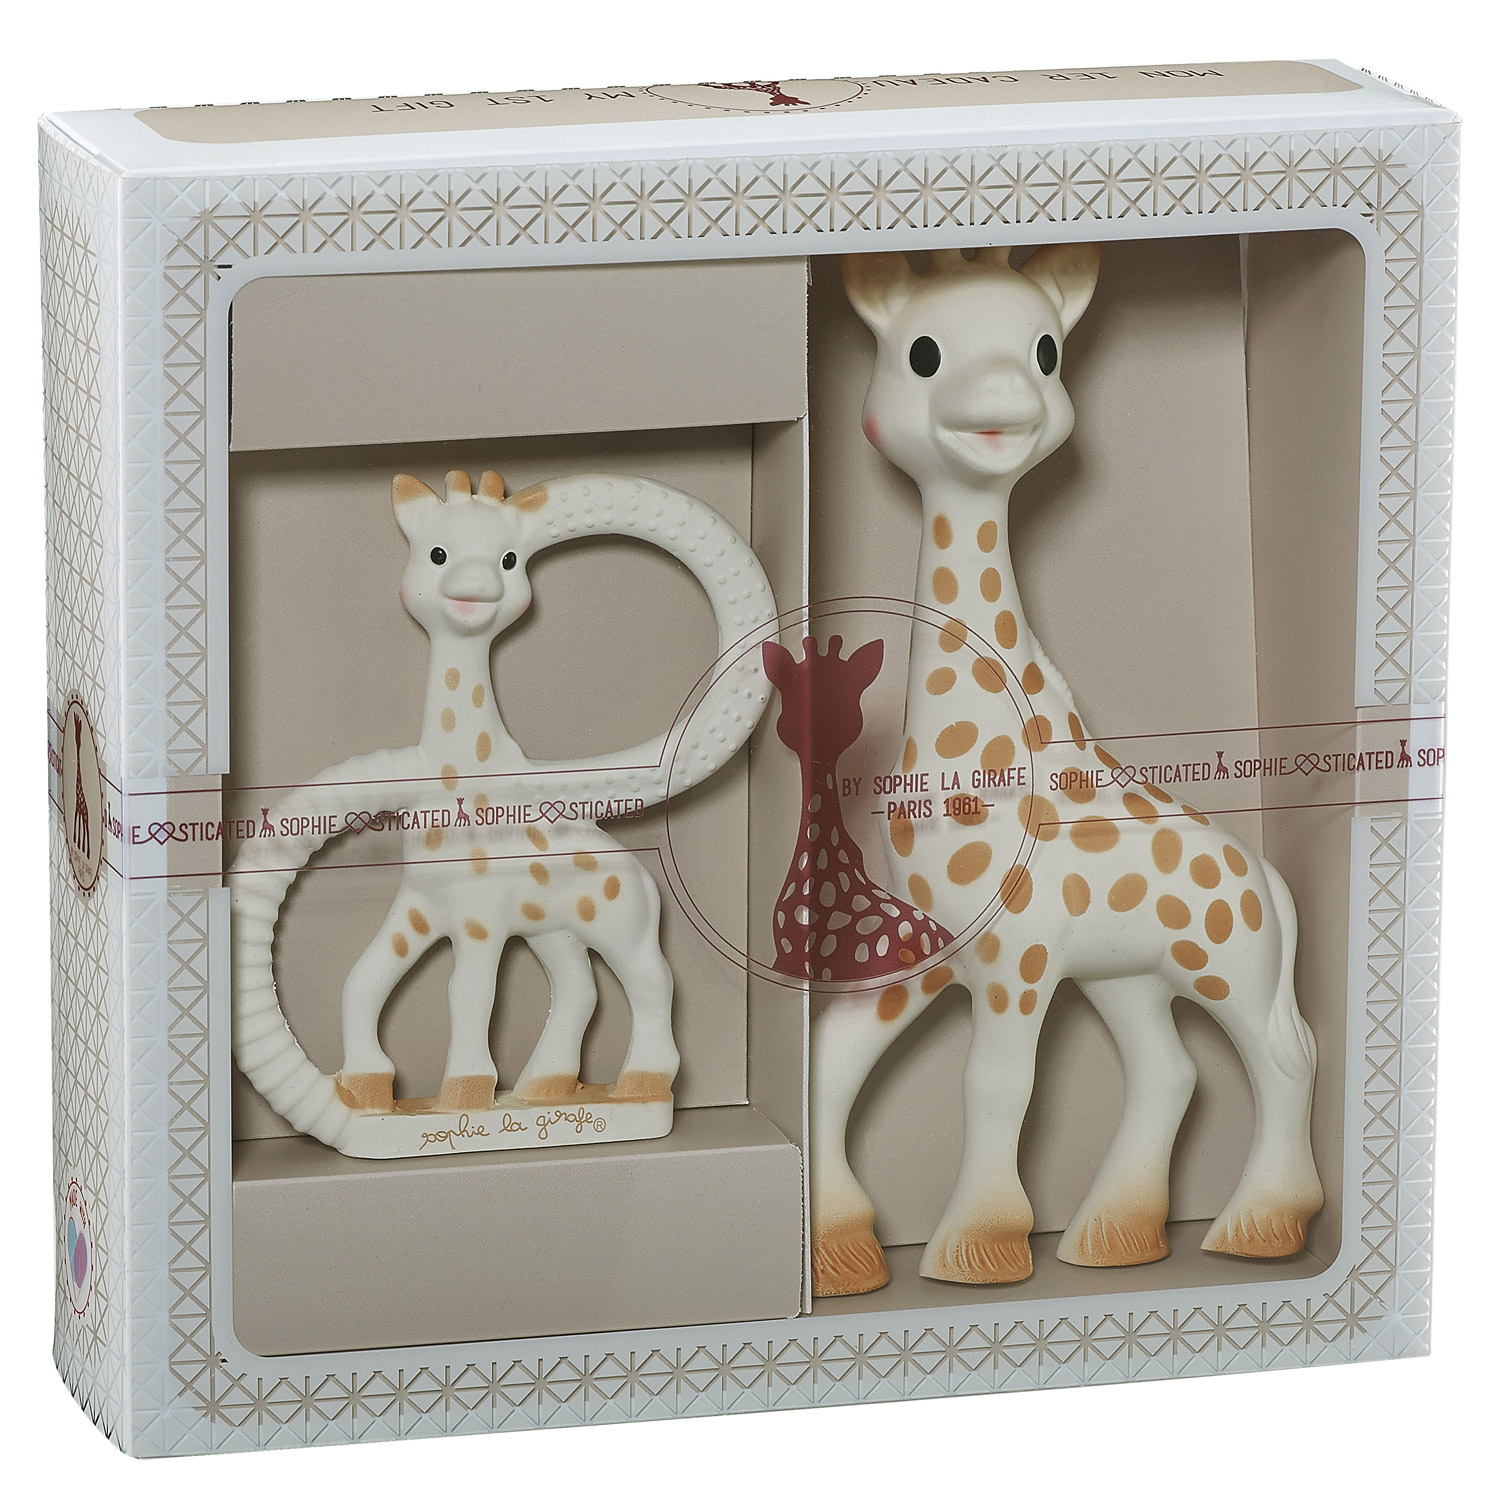 VULLI Coffret cadeau naissance hochet Sophie la girafe® n°5